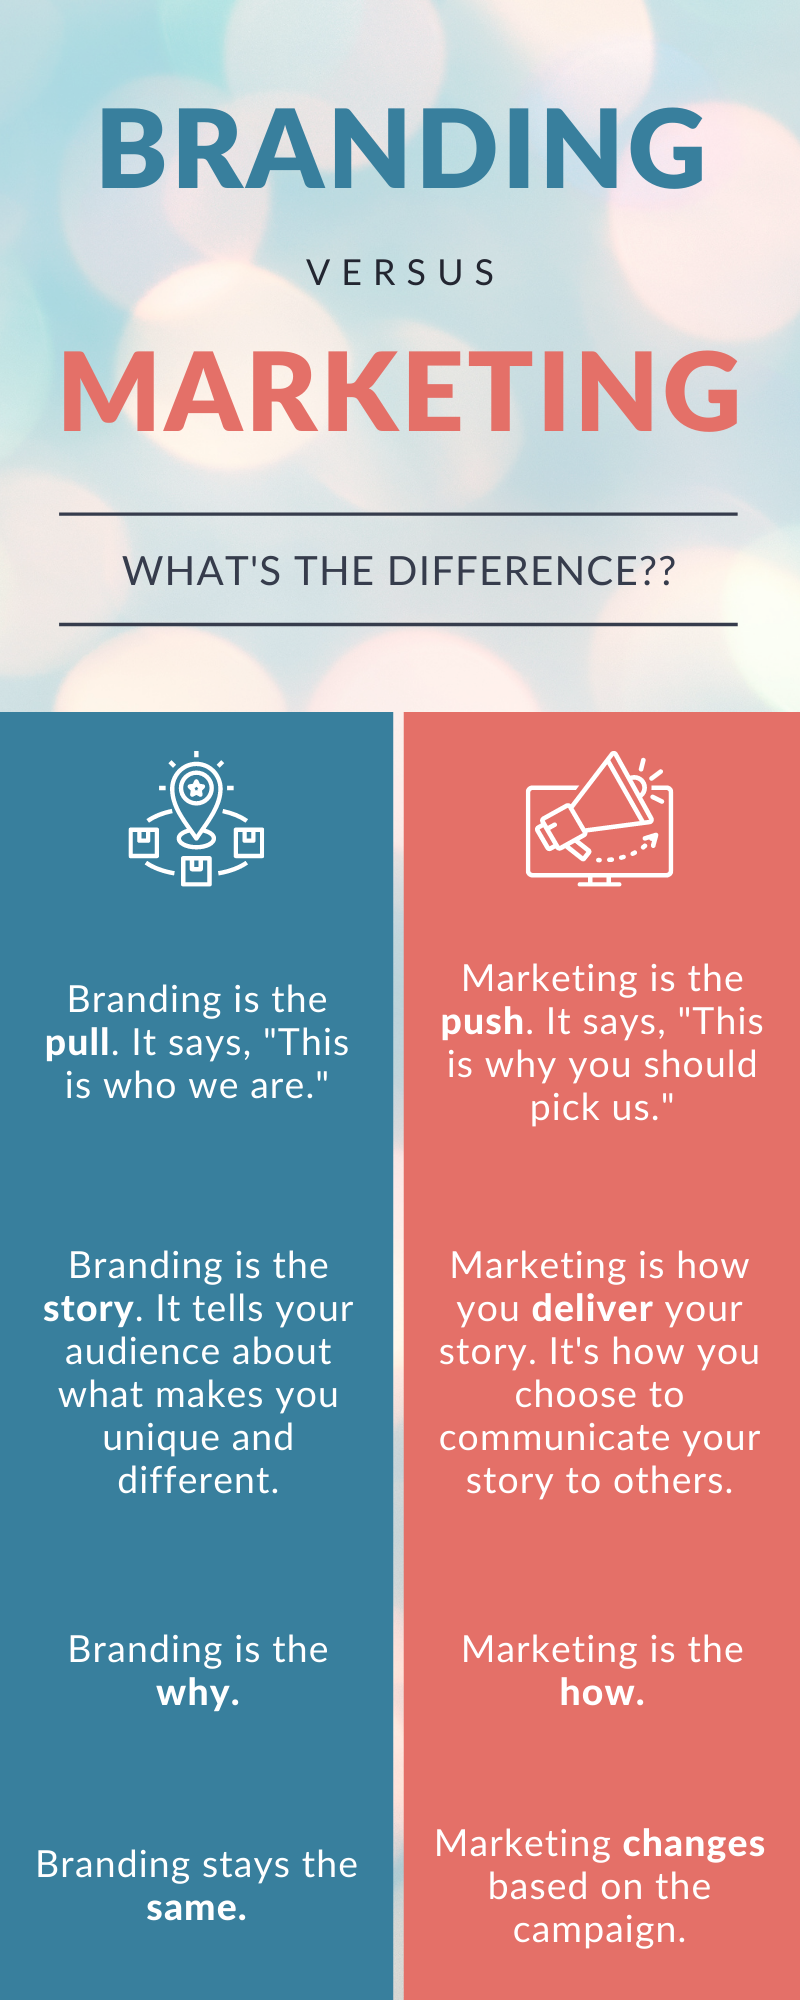 Branding vs Marketing Infographic.png